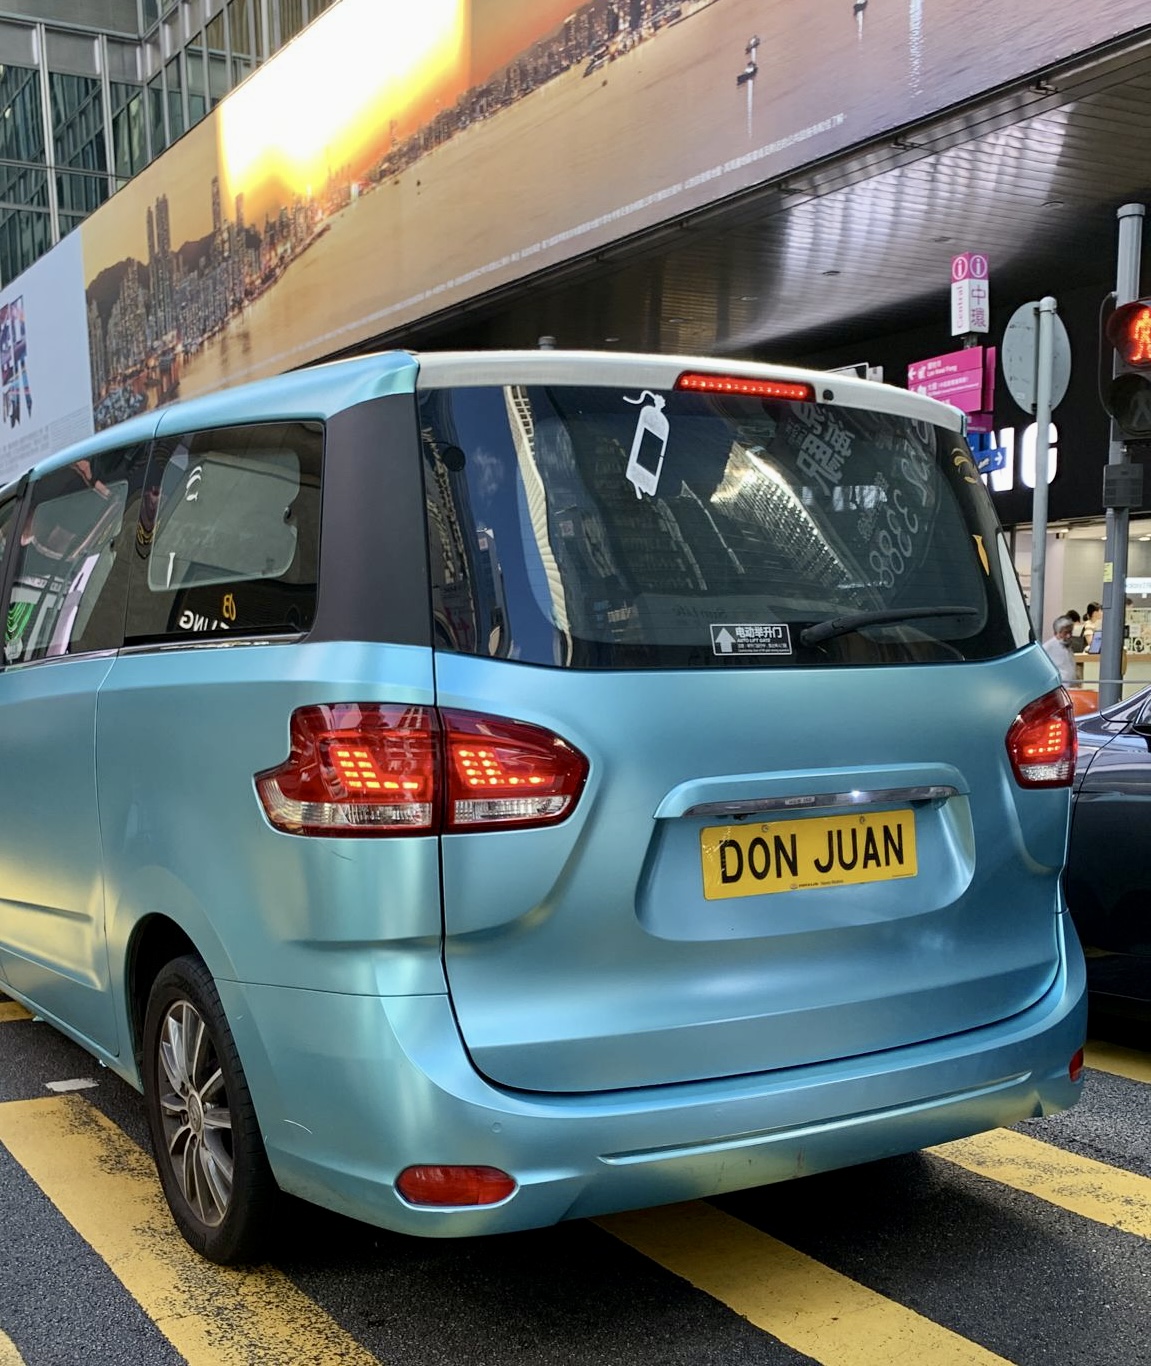 Don Juan HK license plate